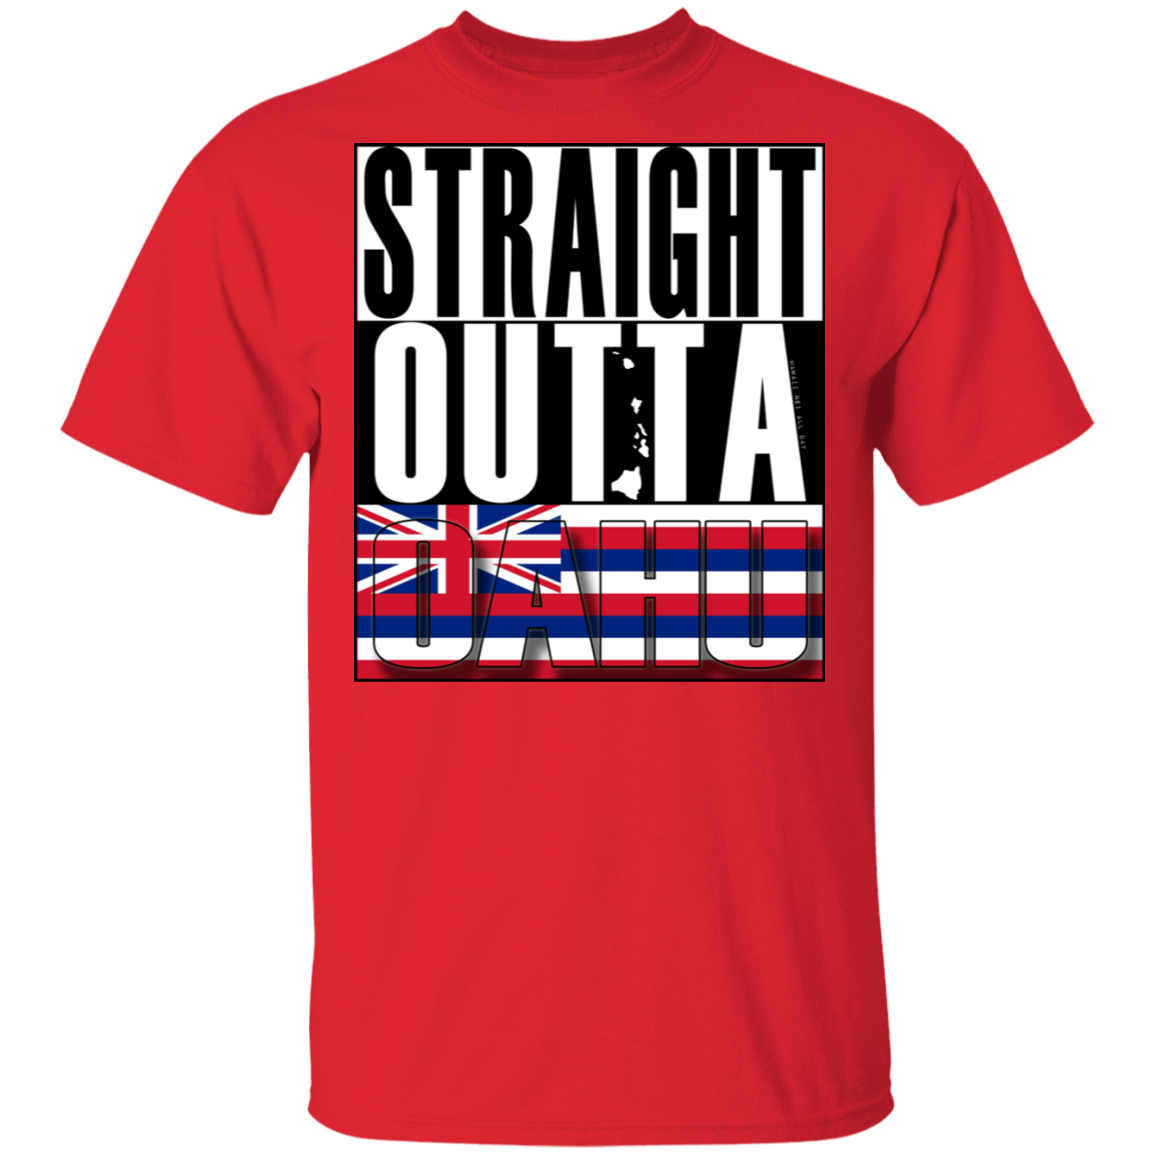 Straight Outta Oahu T-Shirt